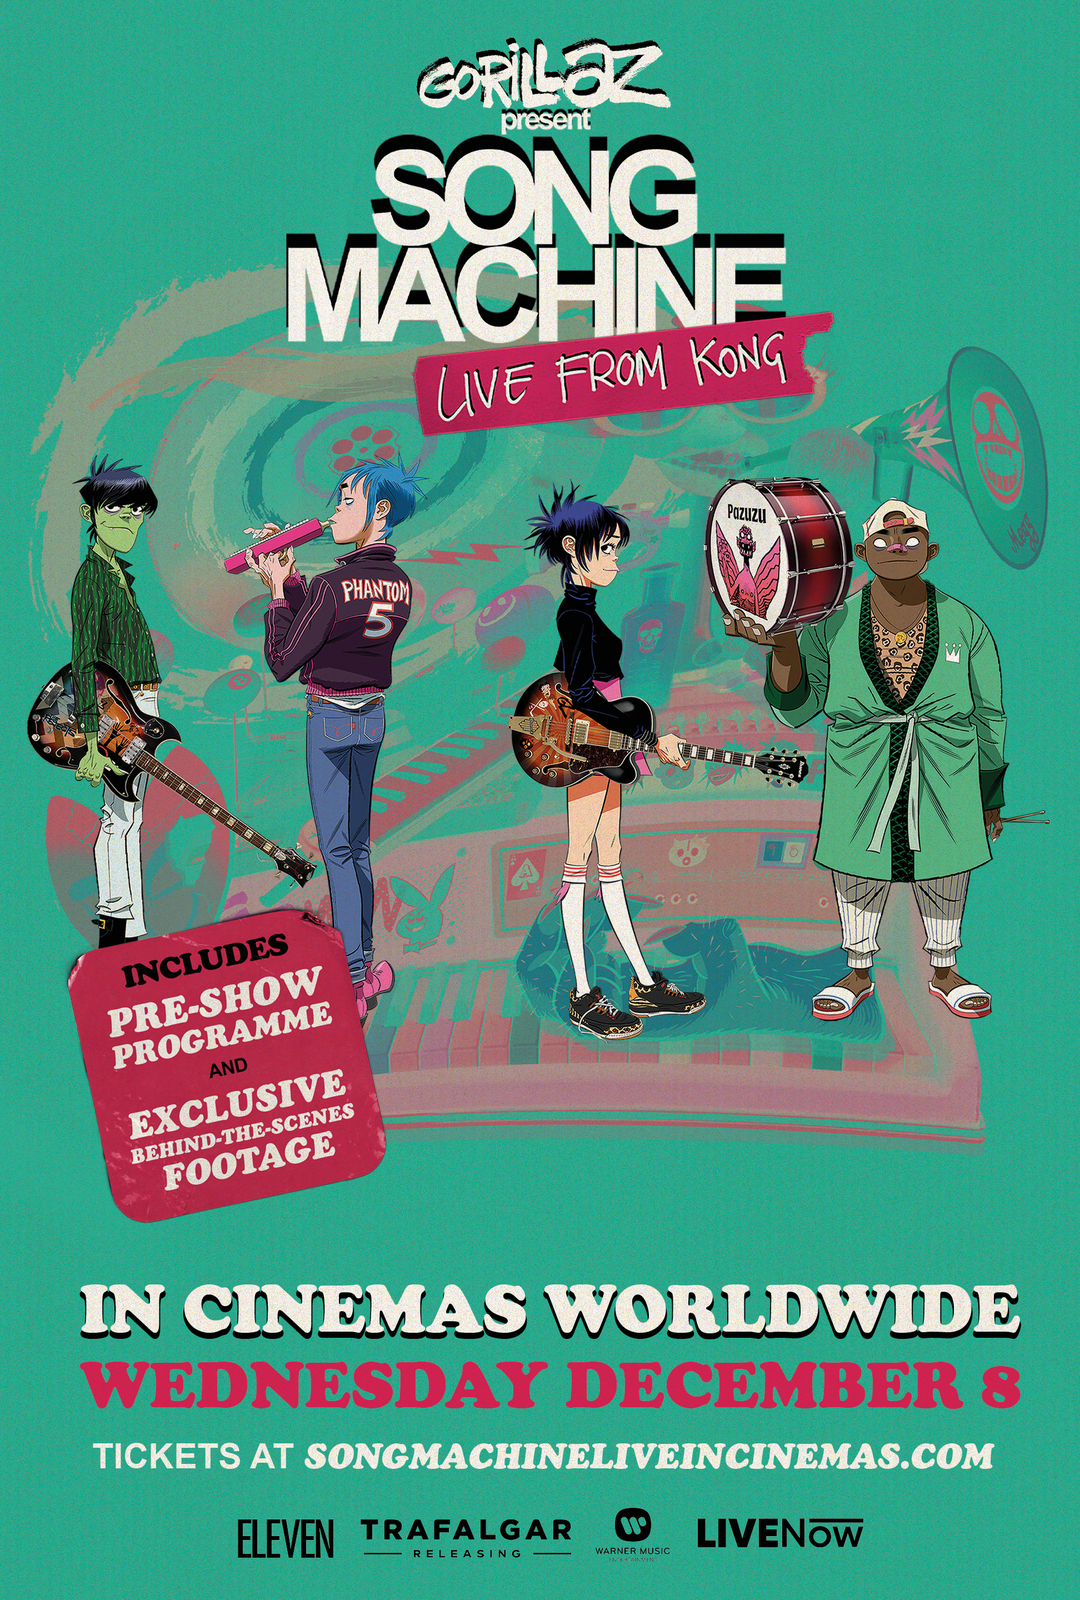 Gorillaz Song Machine Live From Kong Poster UK Rock Band Art Print 24x36 #1